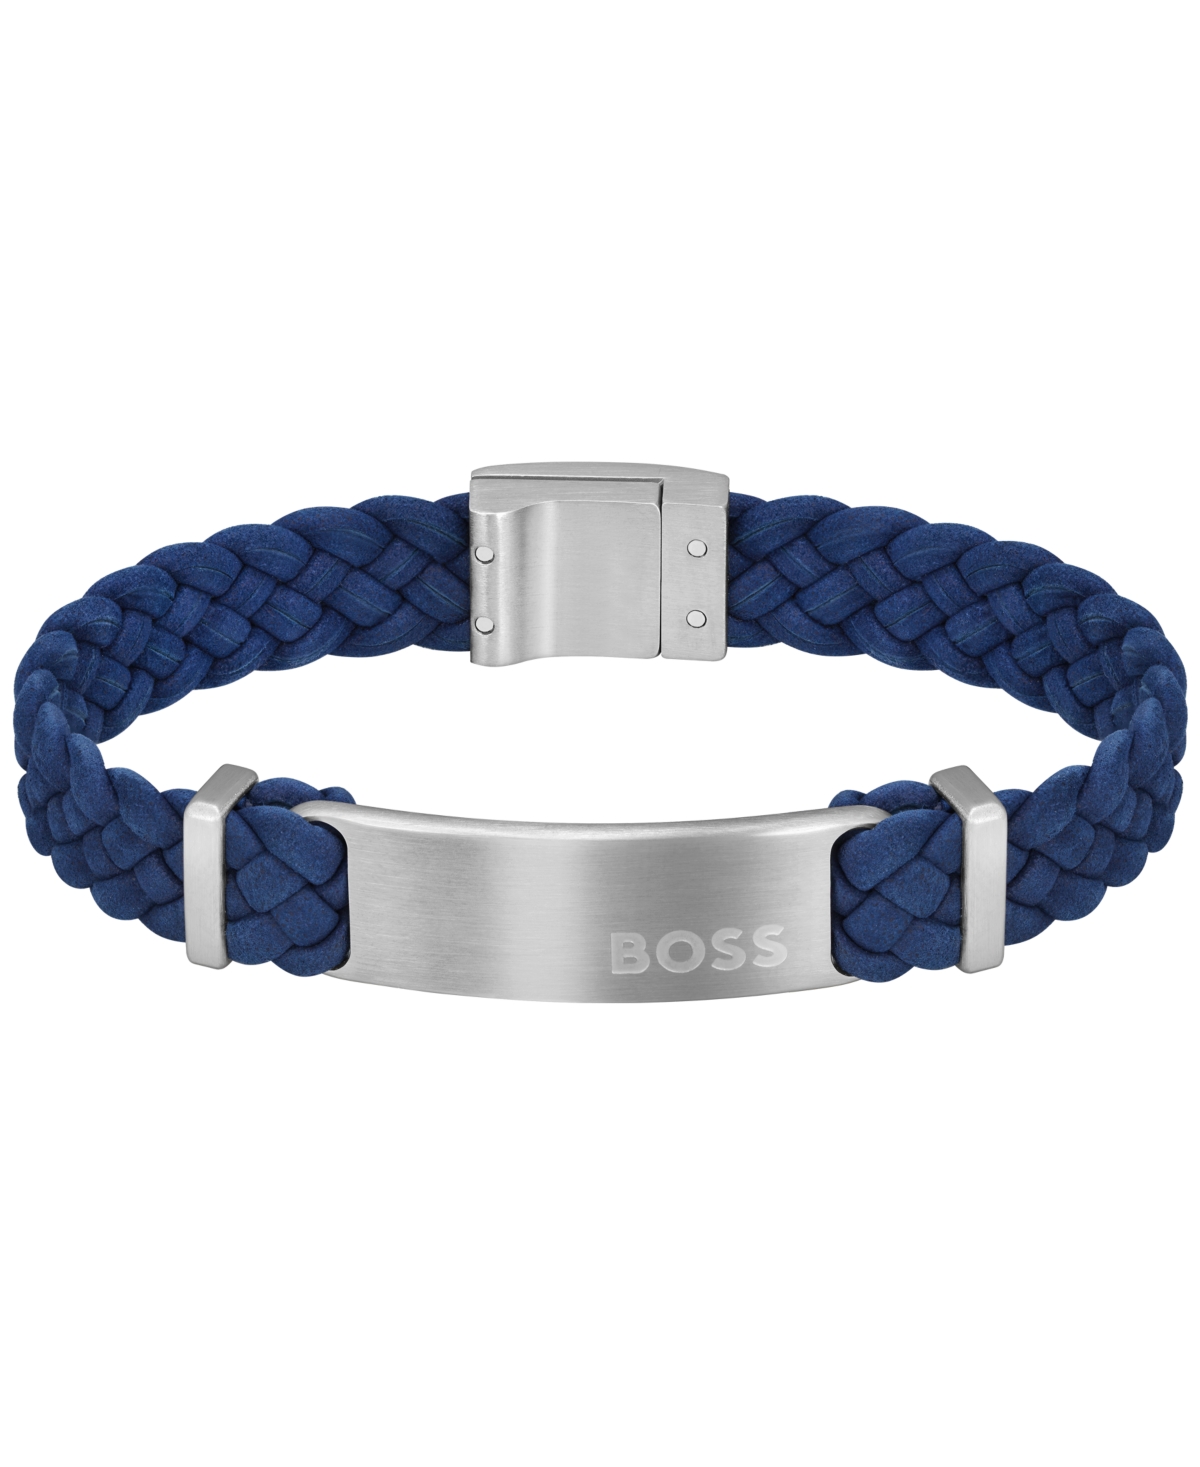 Men's Dylan Stainless Steel Navy Leather Bracelet - Blue